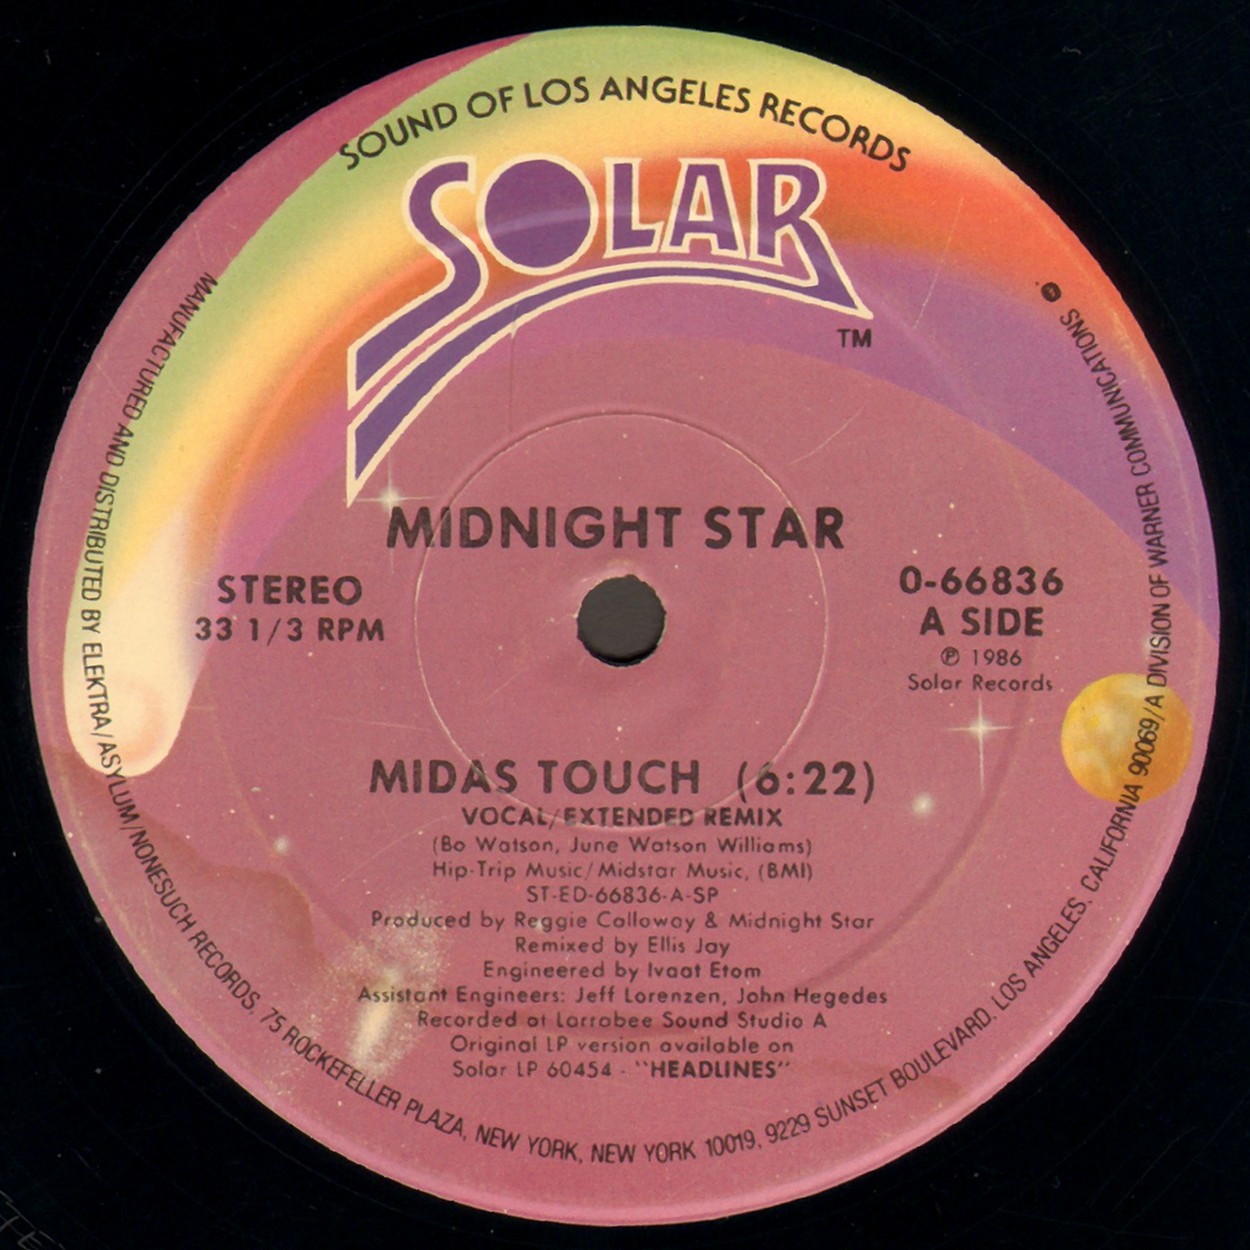 Midas touch kiss of life перевод. Midnight Star – headlines. Полночная звезда. Midnight и Starlight. Midnight Star Group Calloway brothers.